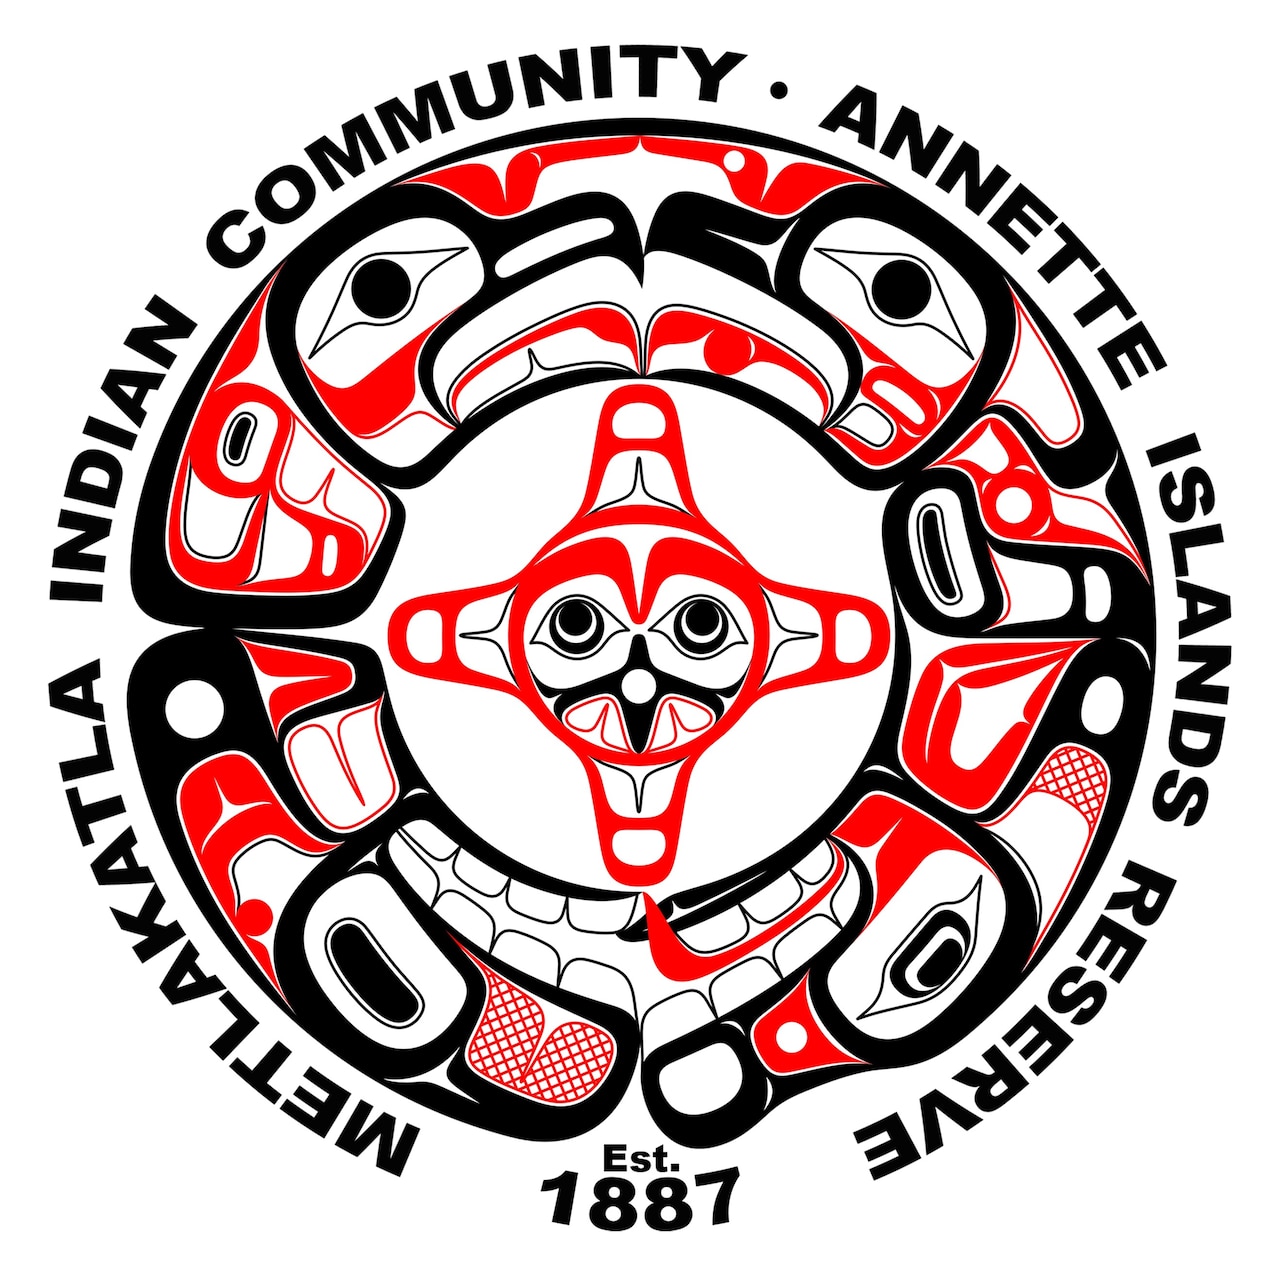 Metlakatla Indian Community Seal